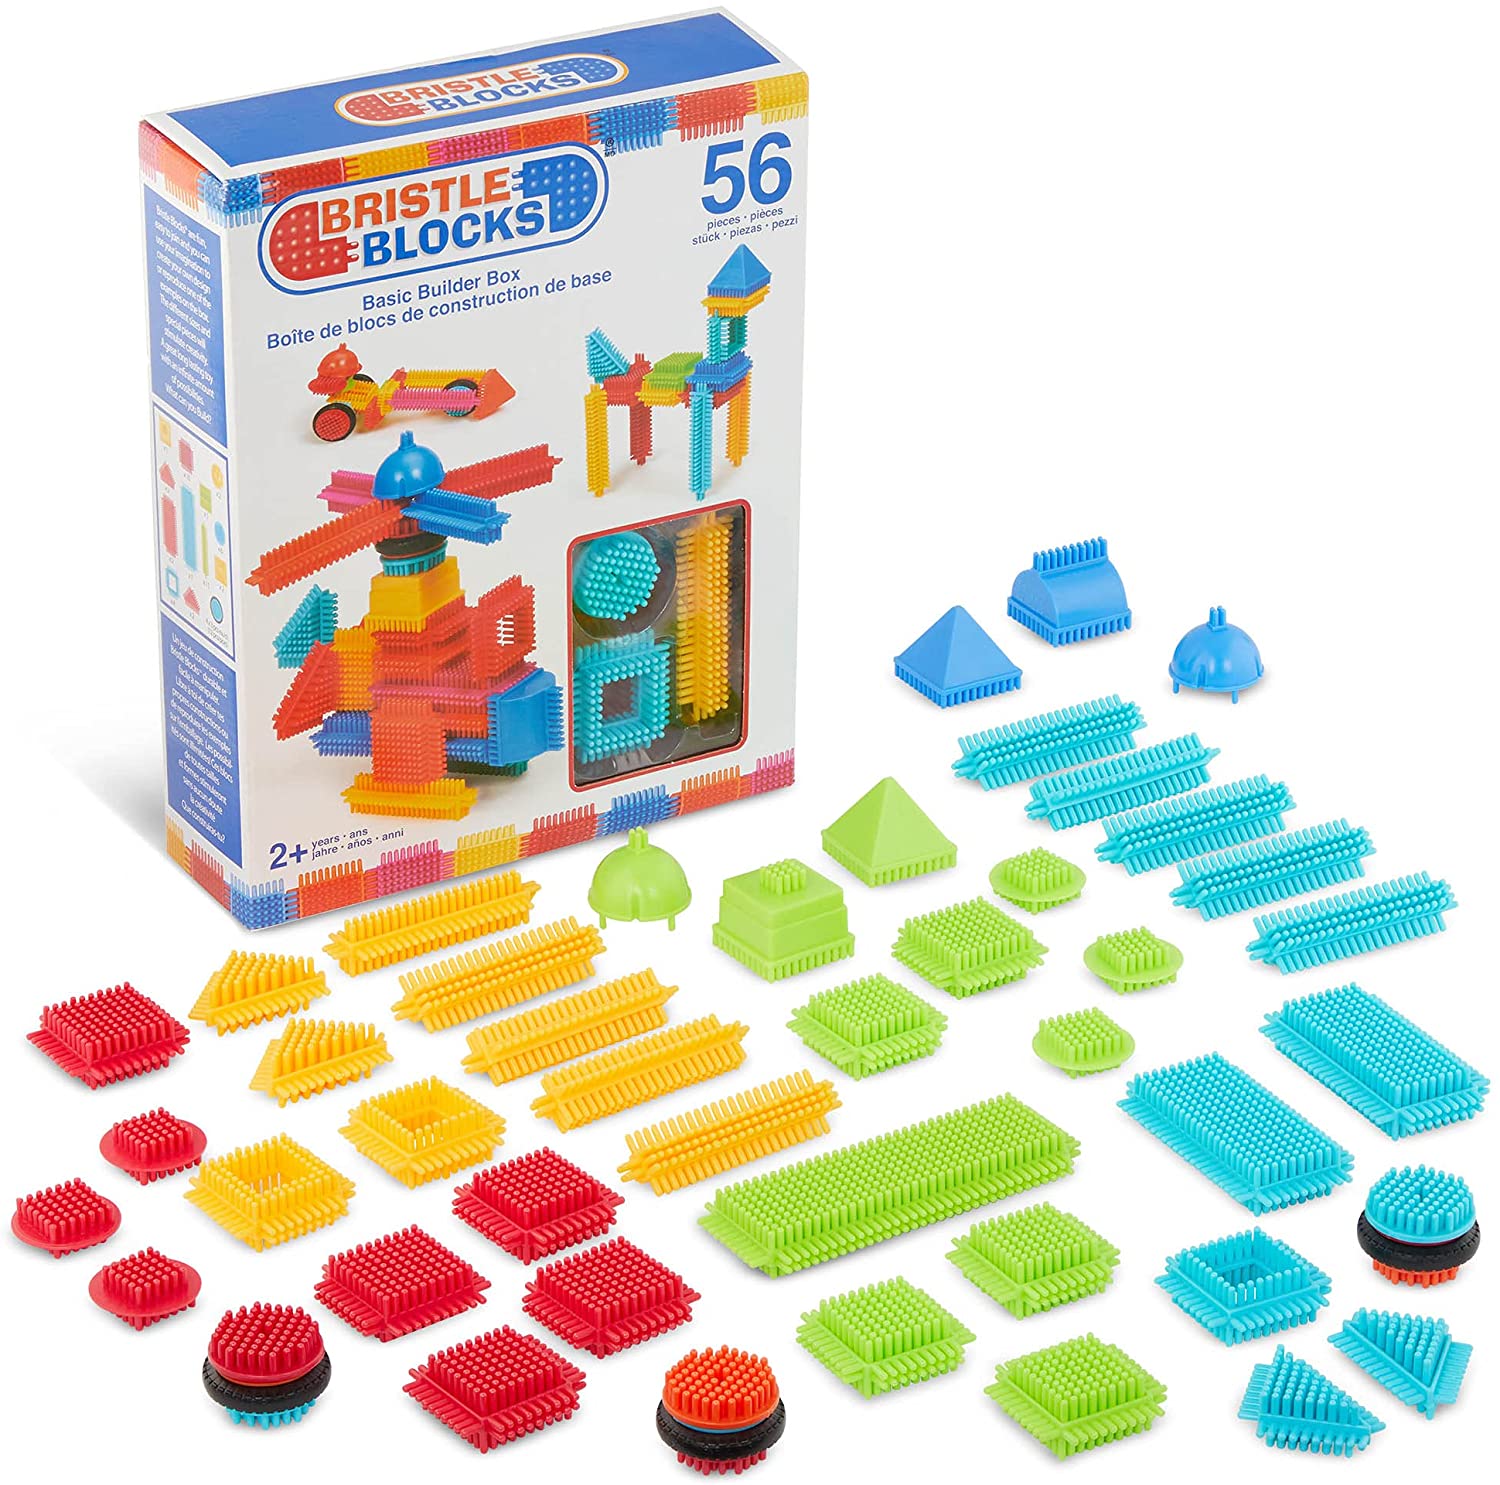 Basic Builder Case Bristle Blocks by Battat for Toddlers and Kids Aged 2 Years + Soft Developmental Toys STEM Interlocking Building Blocks 50pc Playset 